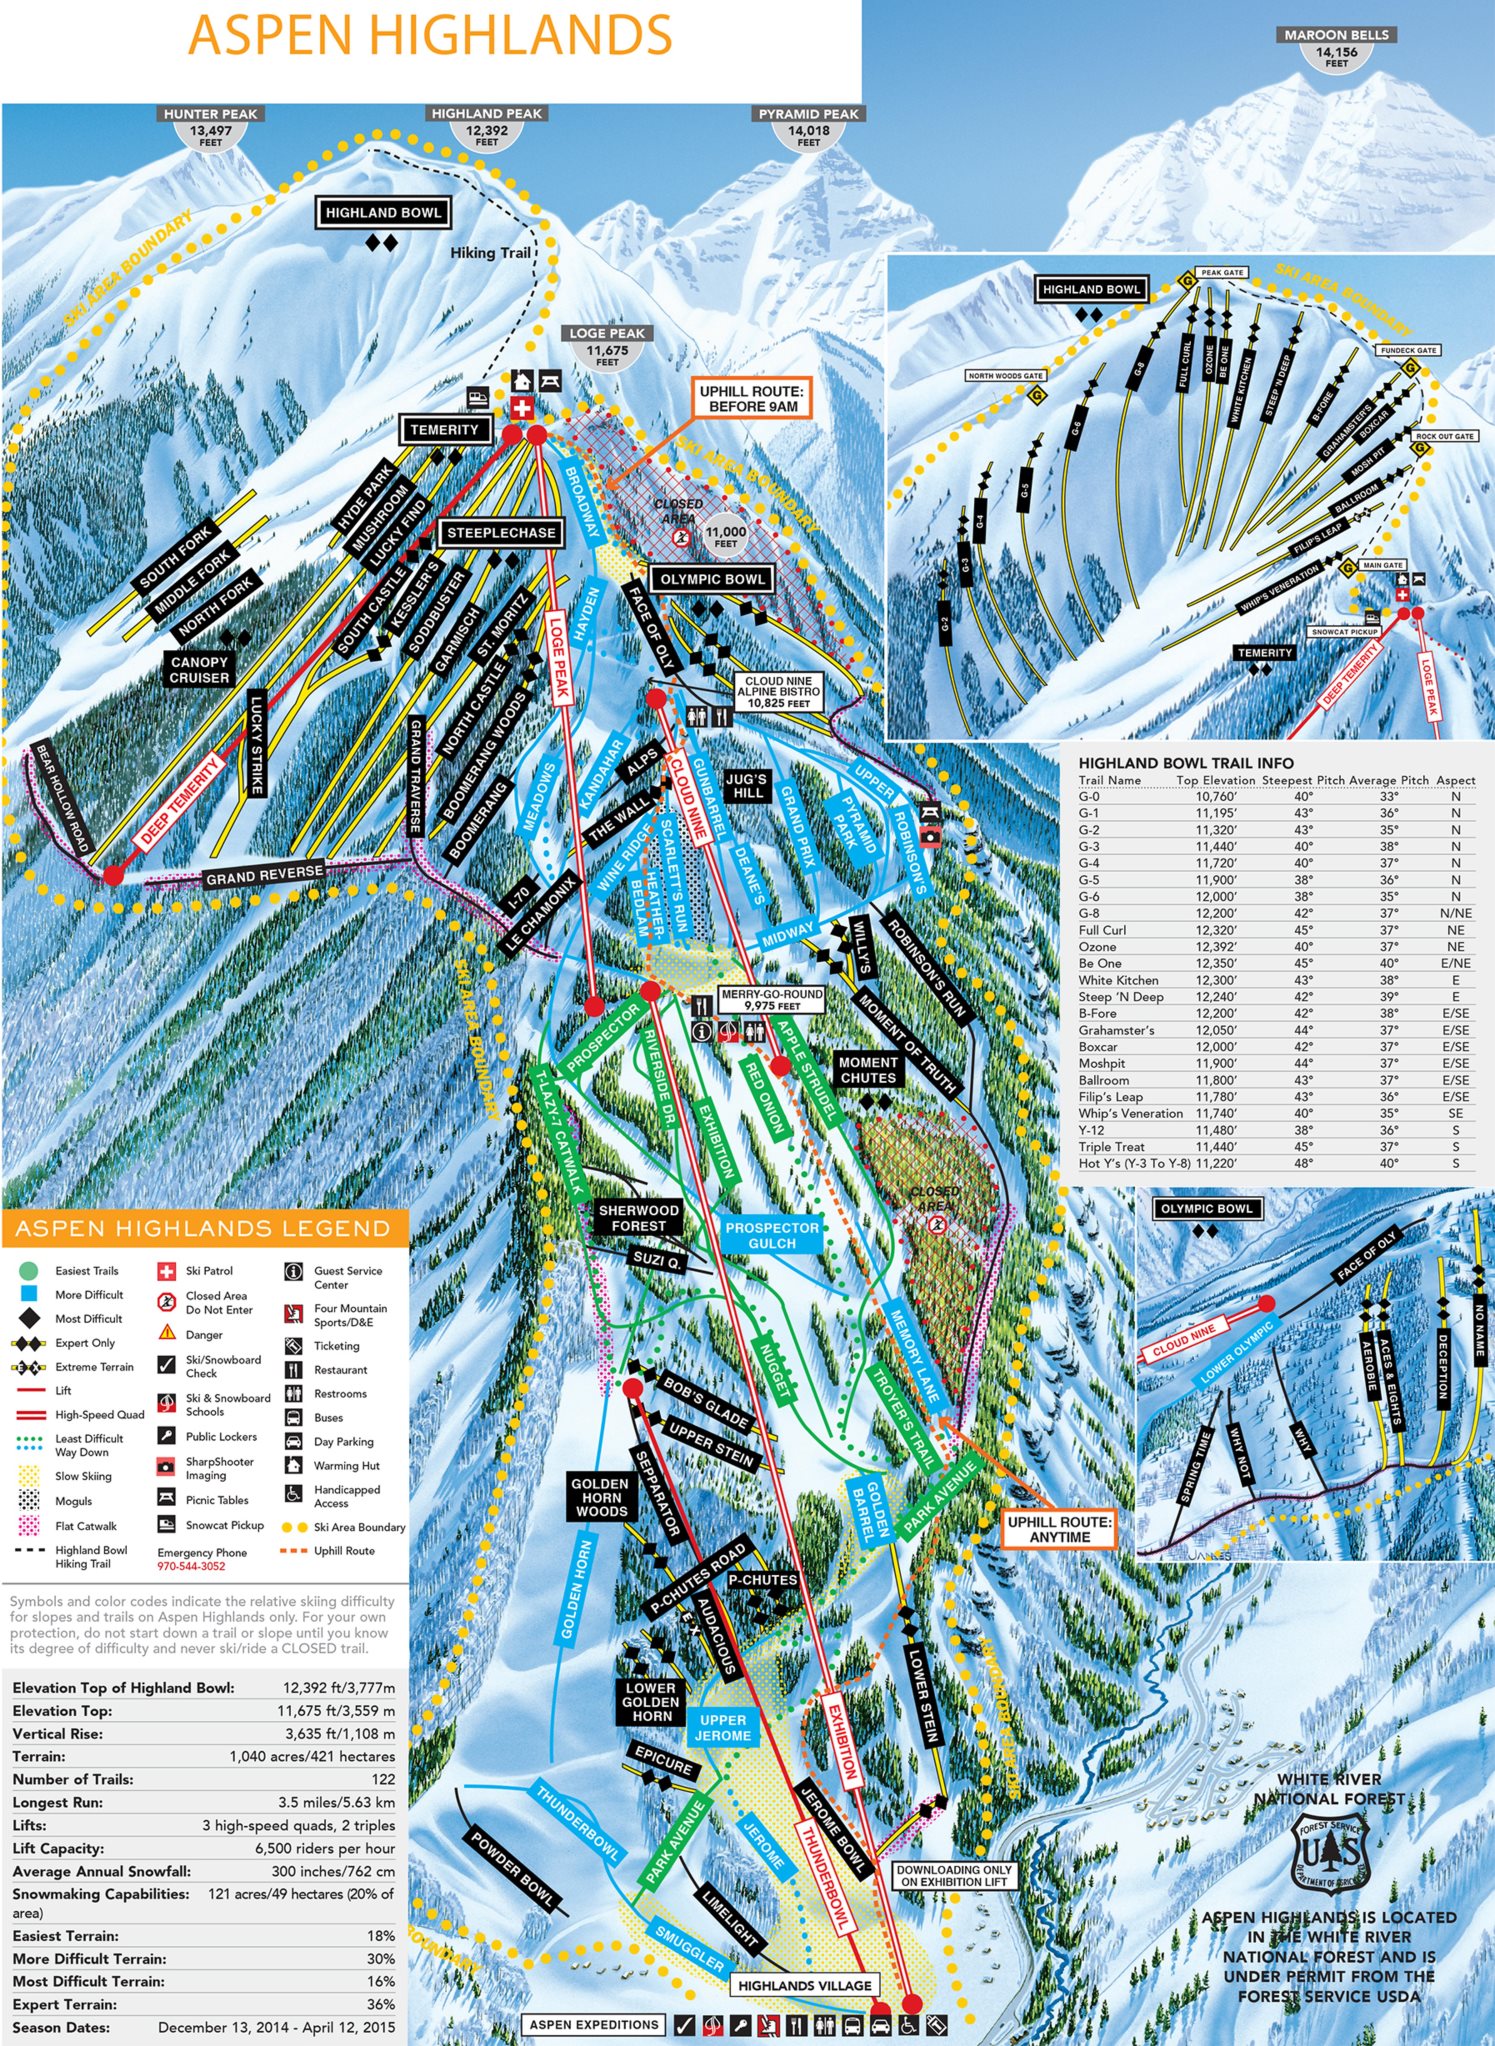 Aspen highlands ski trail map - Ontheworldmap.com